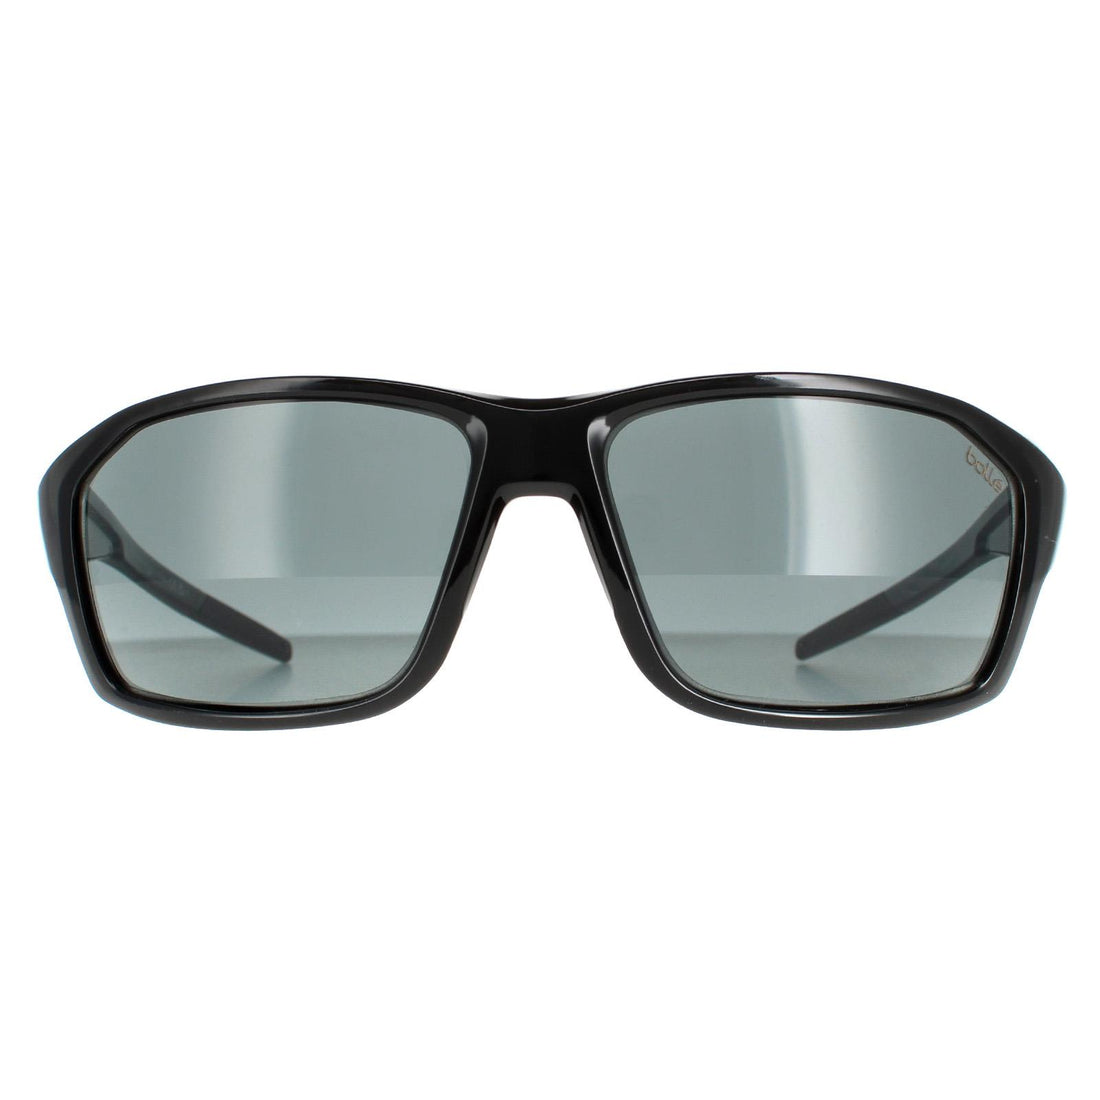 Bolle Sunglasses Fenix BS136001 Shiny Black TNS Grey